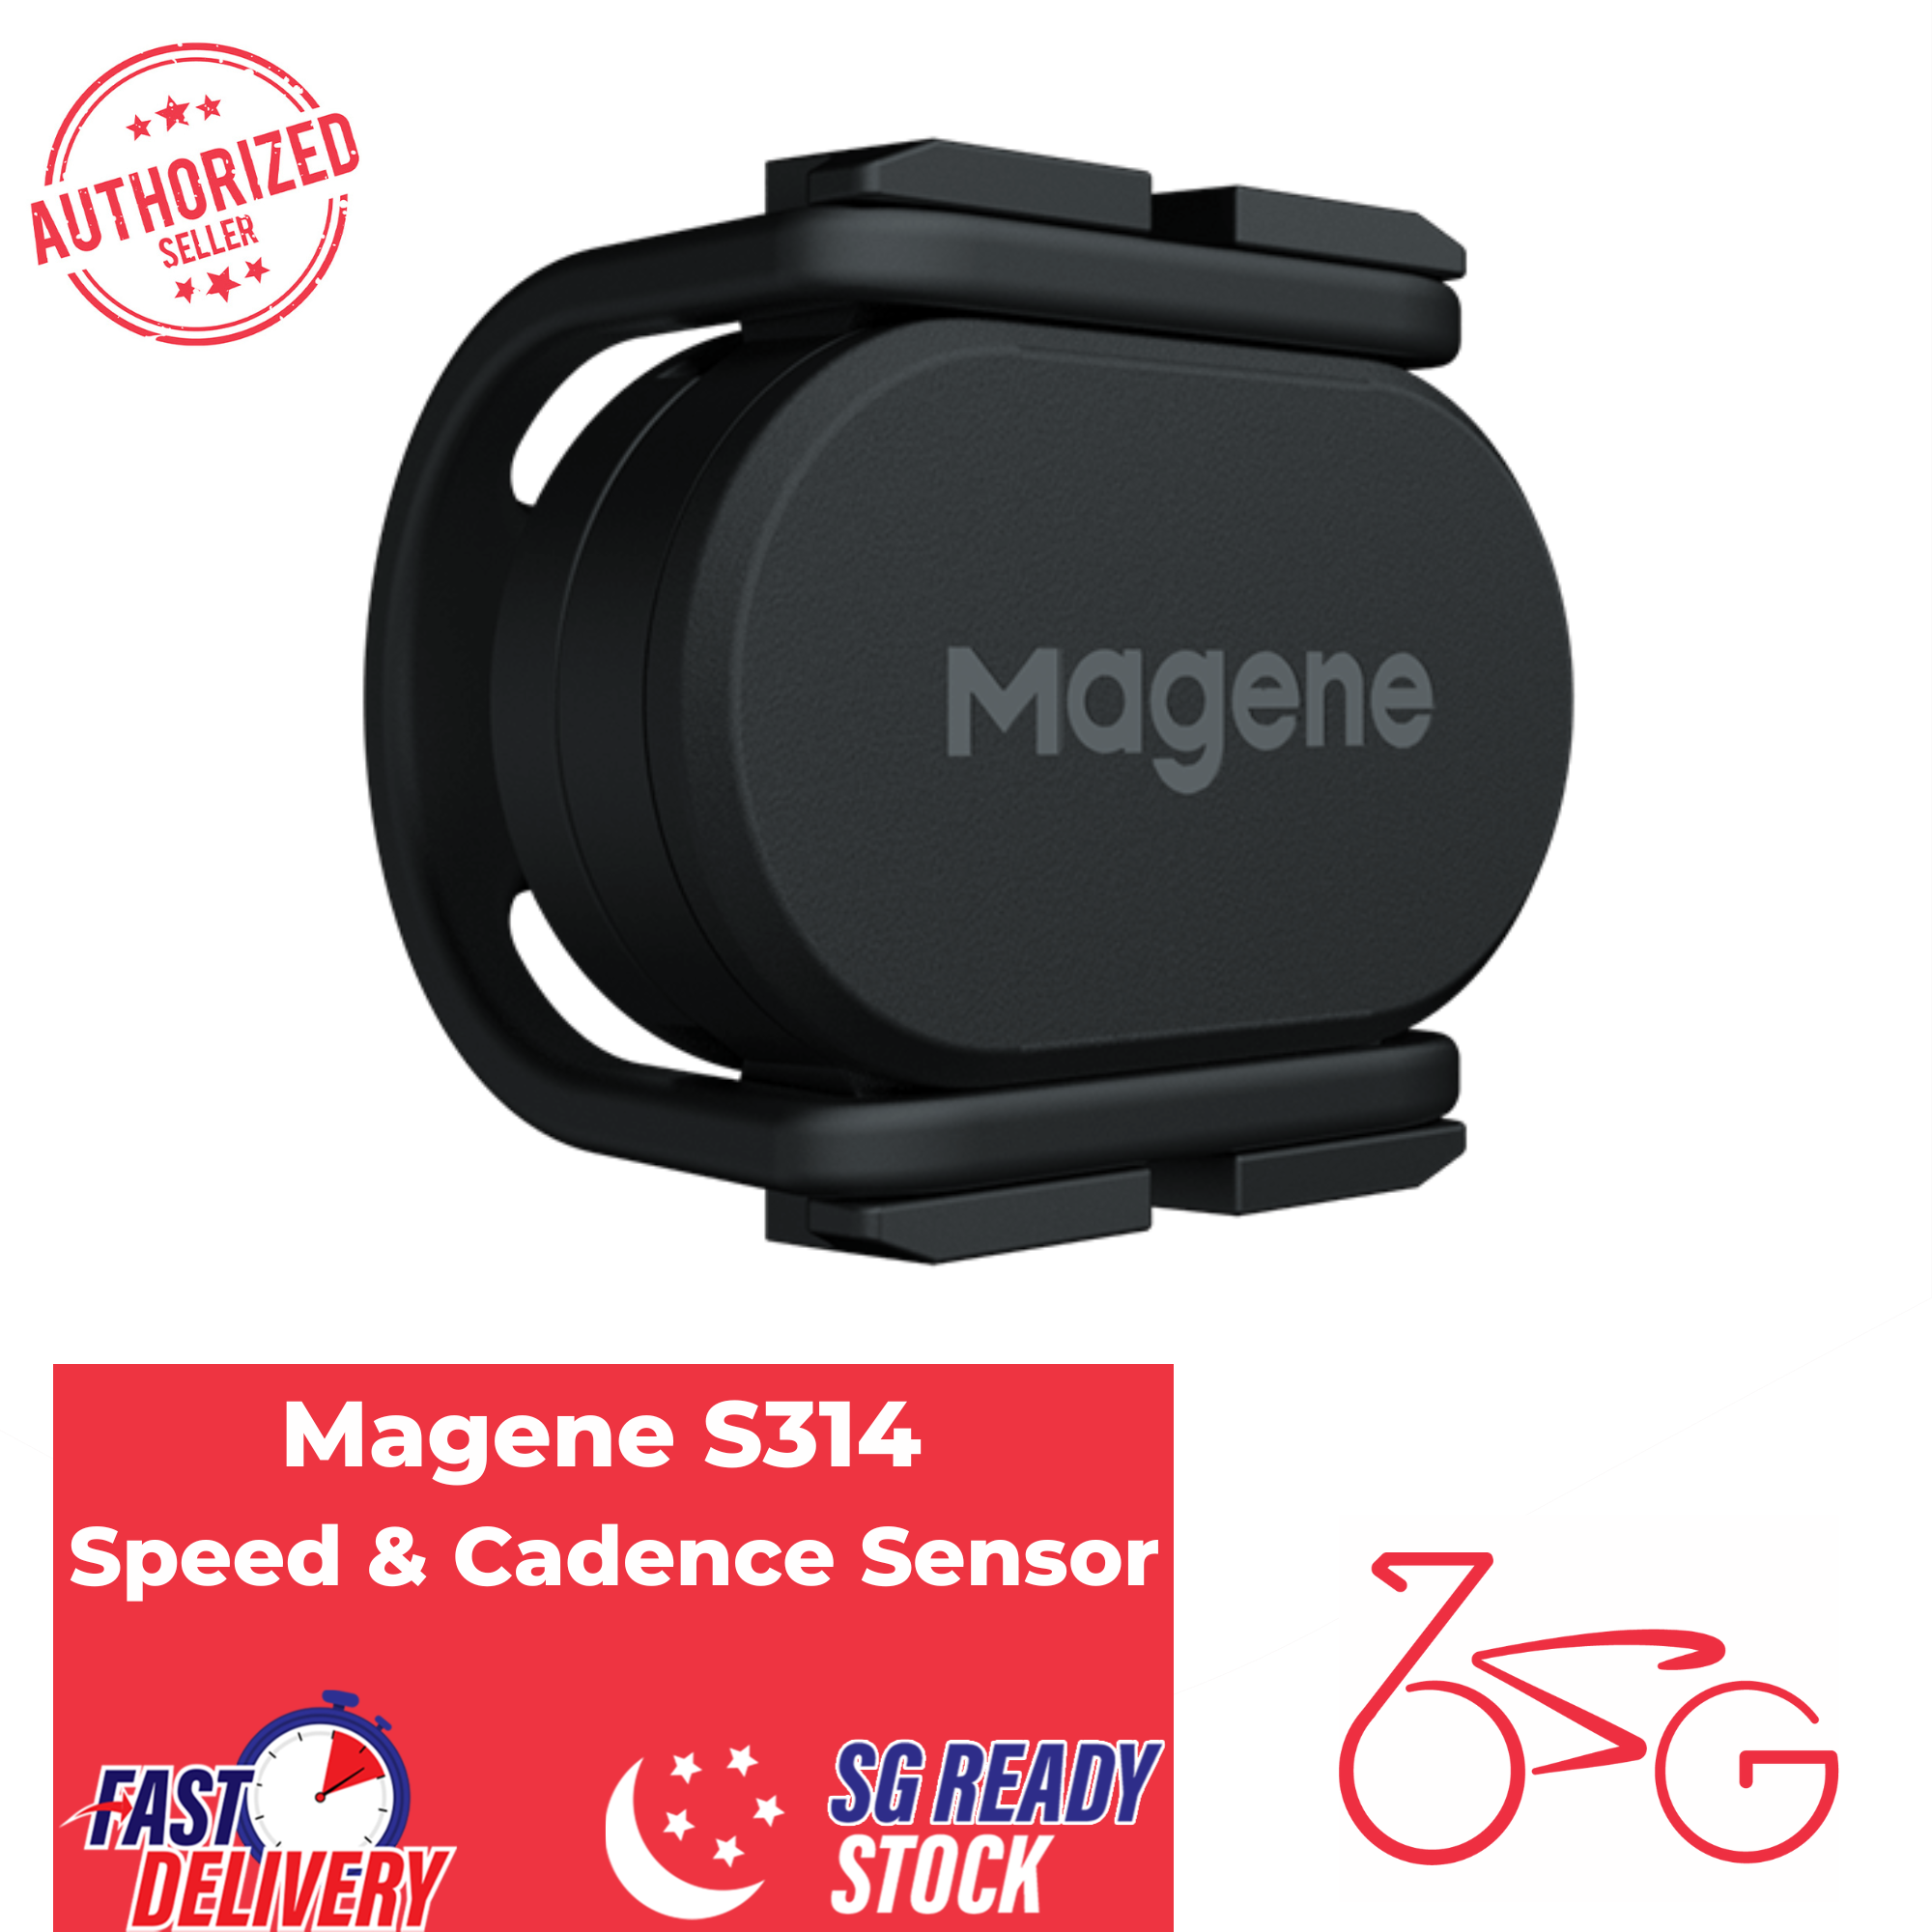 Magene S314 Cycling Cadence Speed Sensor Two in One Bike Cadence